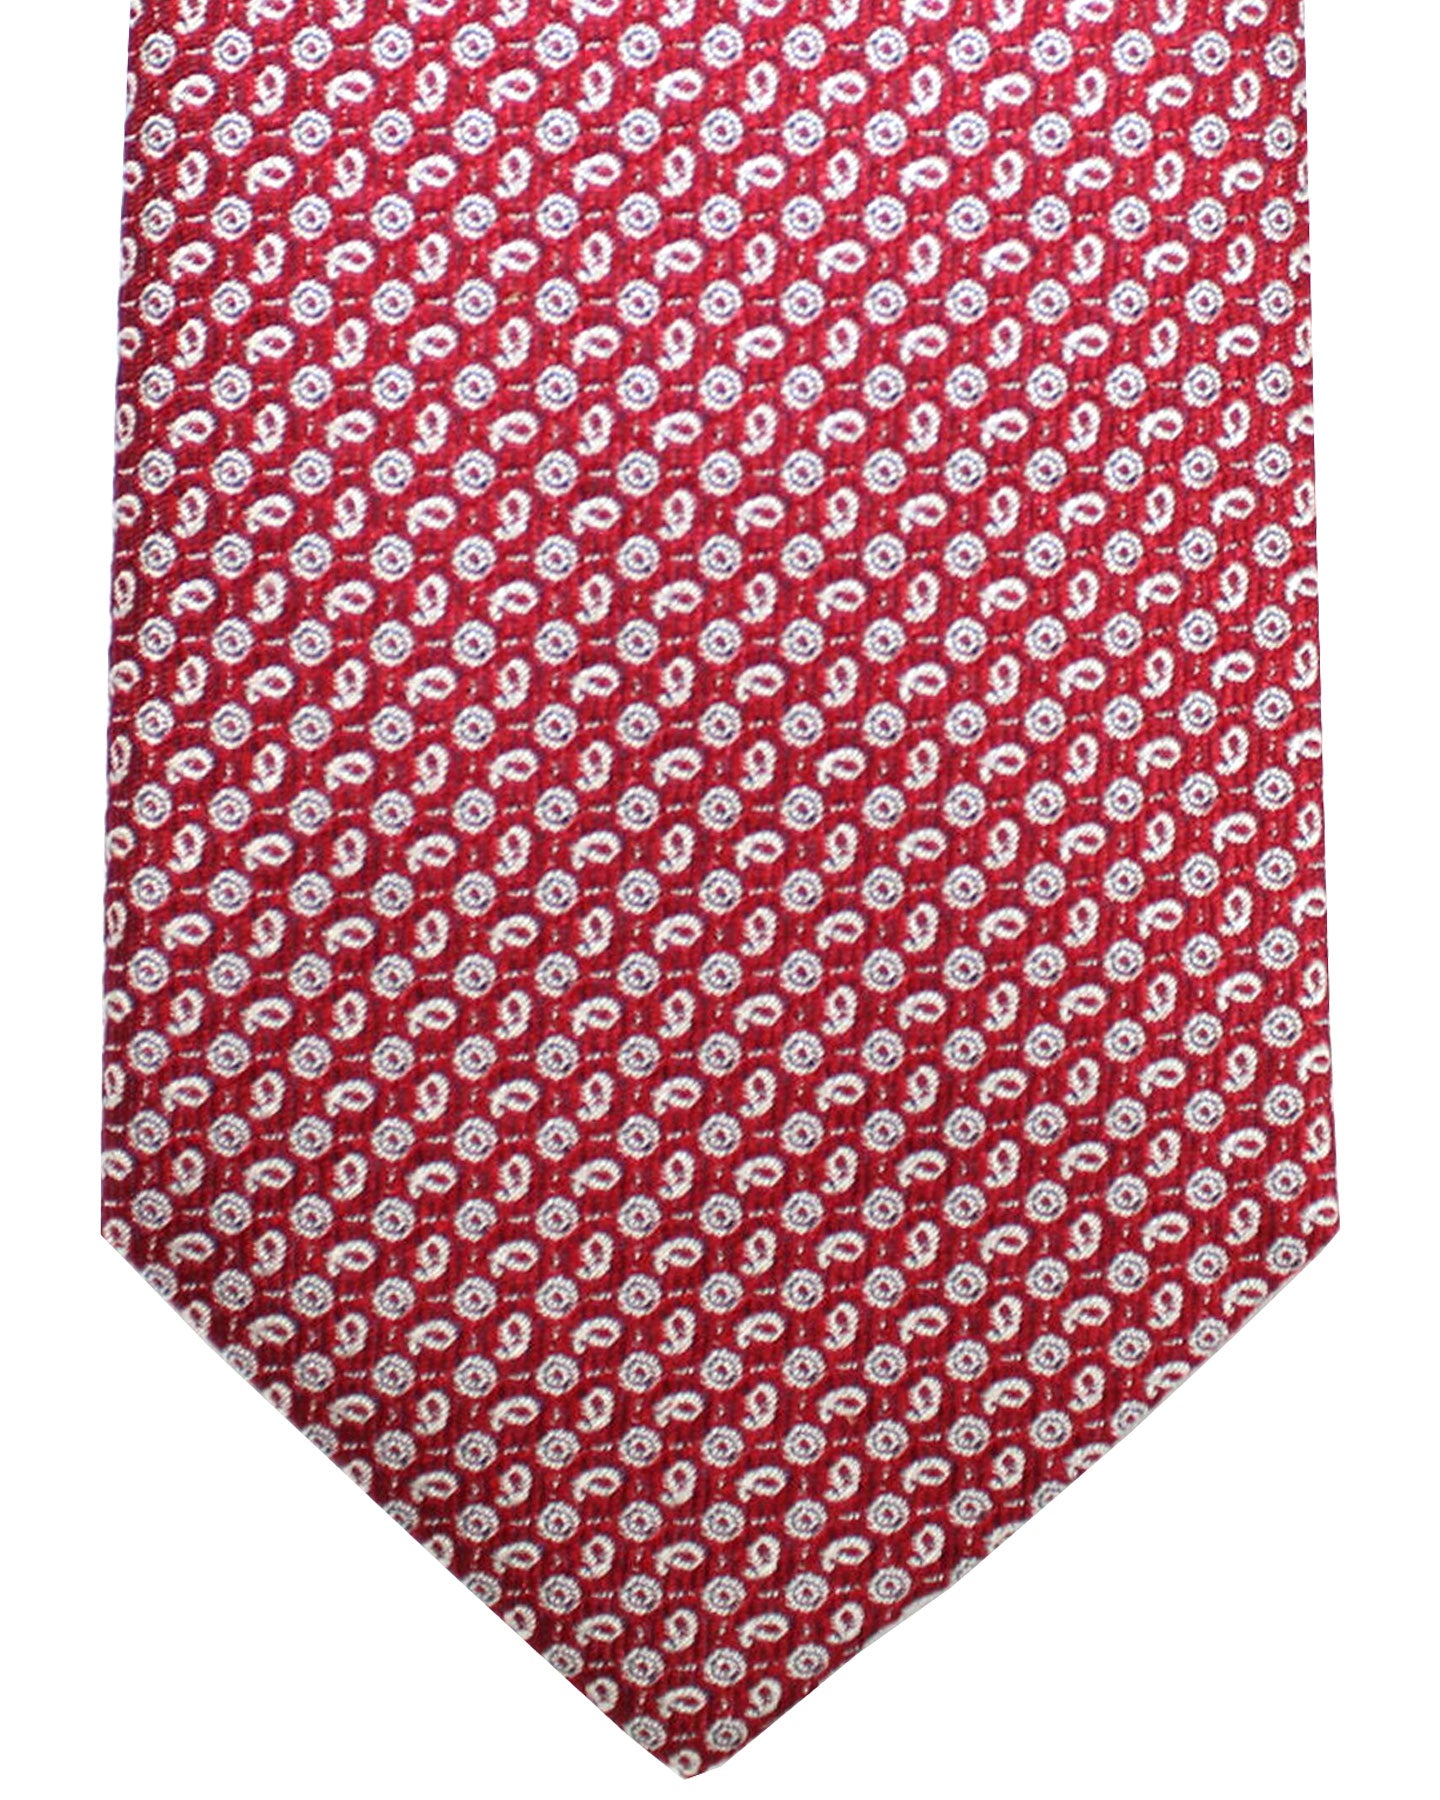 Ungaro Silk Tie Burgundy Geometric - Narrow Cut Designer Necktie